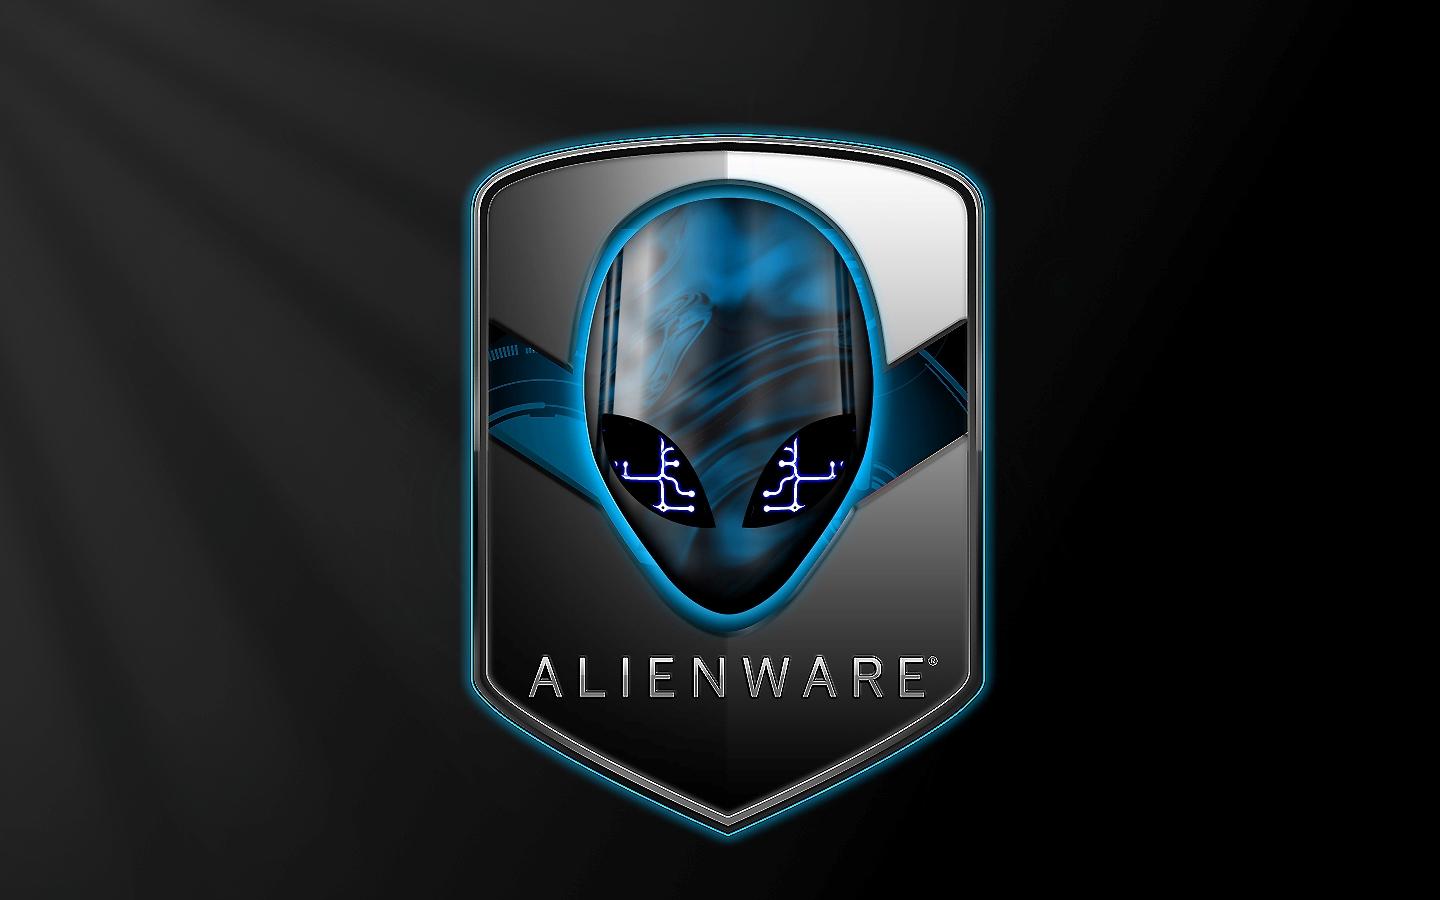 alienware wallpaper hd